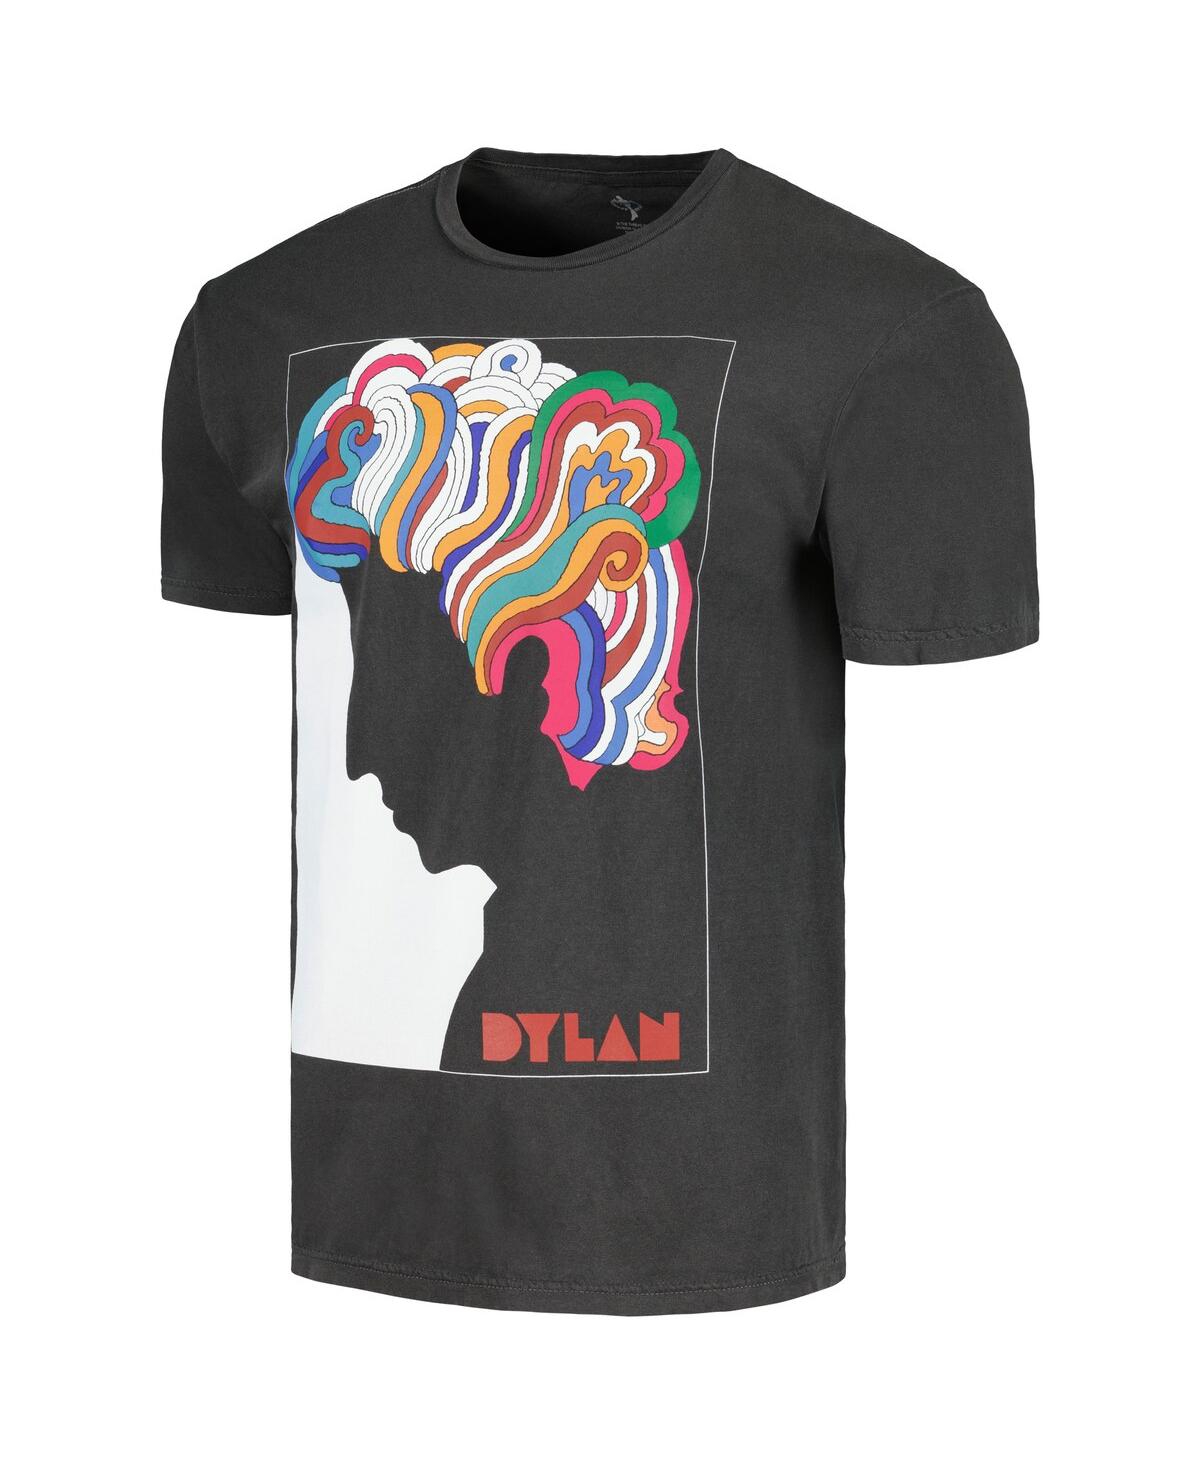 Shop Philcos Men's Charcoal Bob Dylan Washed Graphic T-shirt